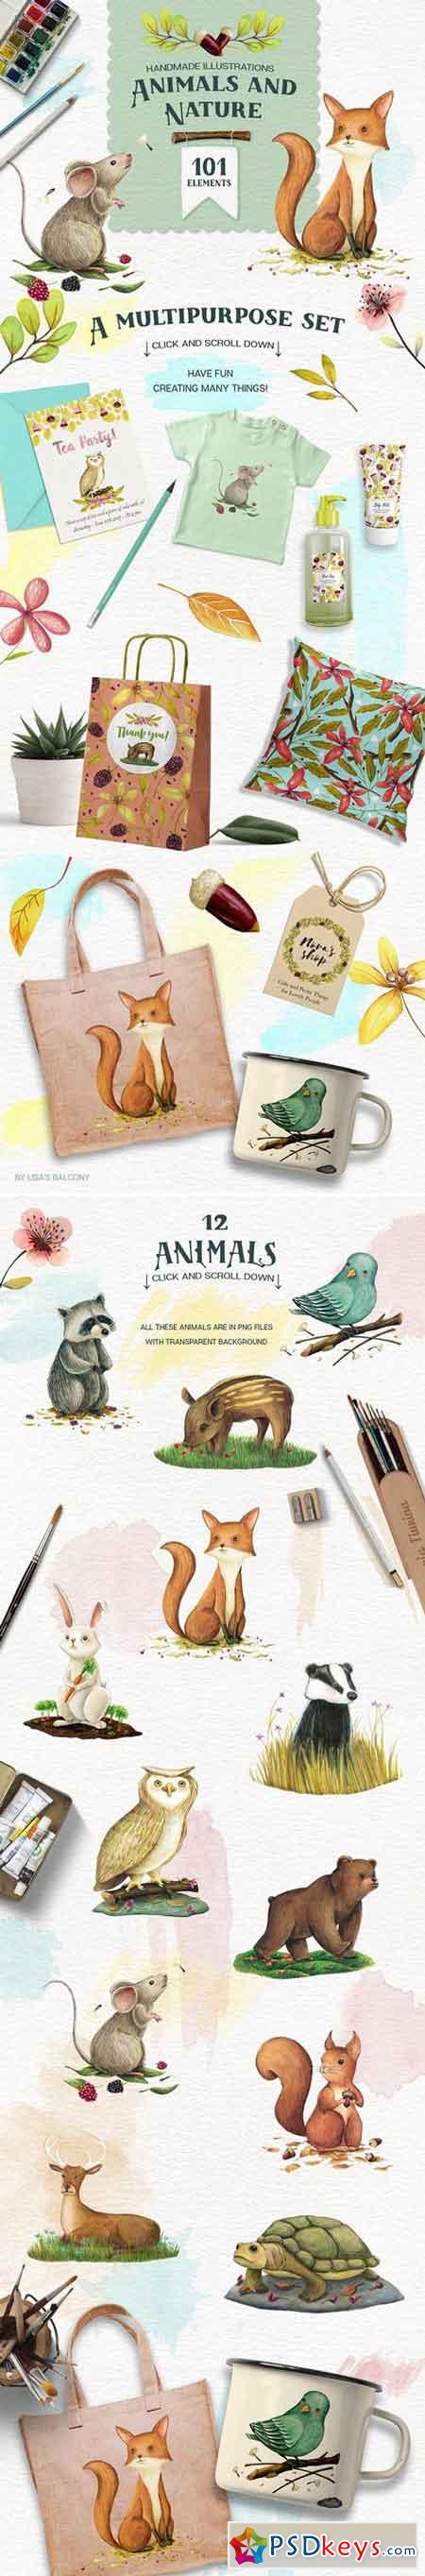 Animals and Nature - Design Kit 1595241